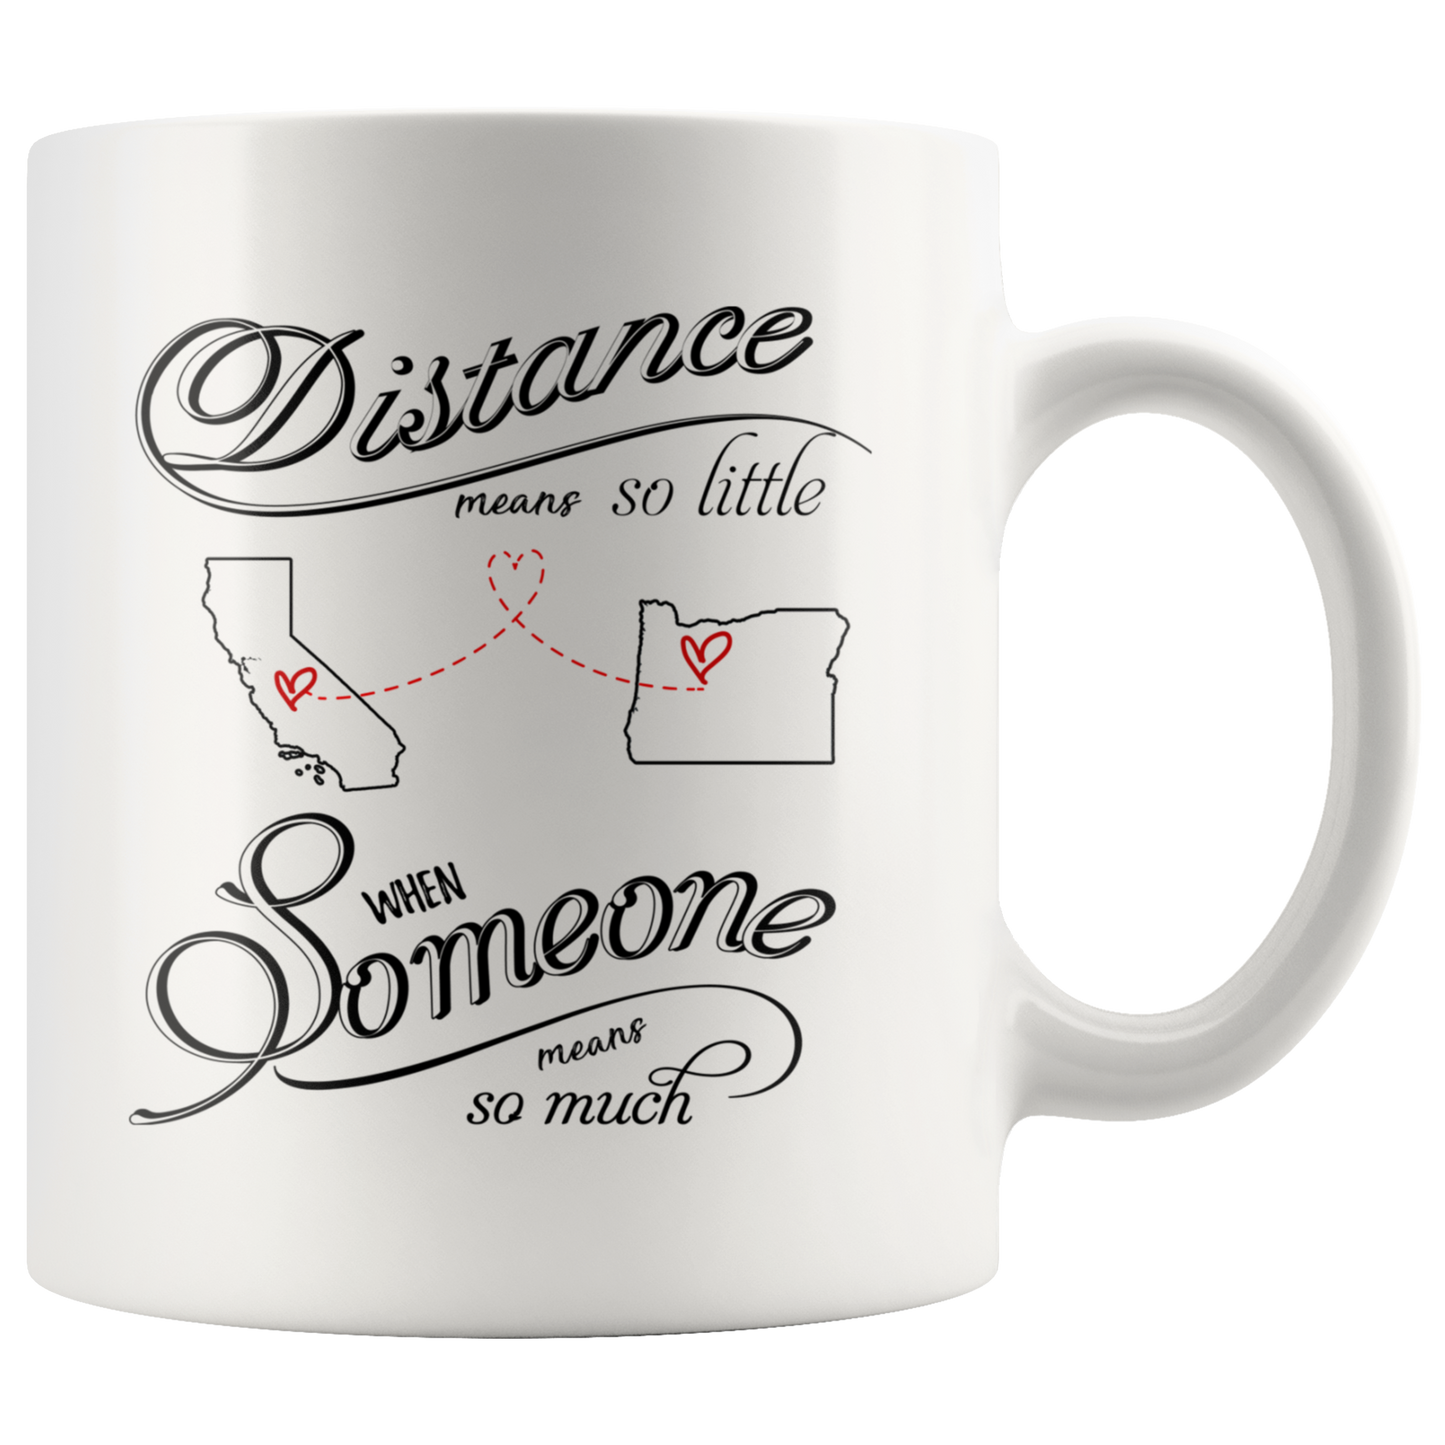 M-20484760-sp-26920 - [ California | Oregon ] (mug_11oz_white) Mothers Day Coffee Mug California Oregon Distance Means So L